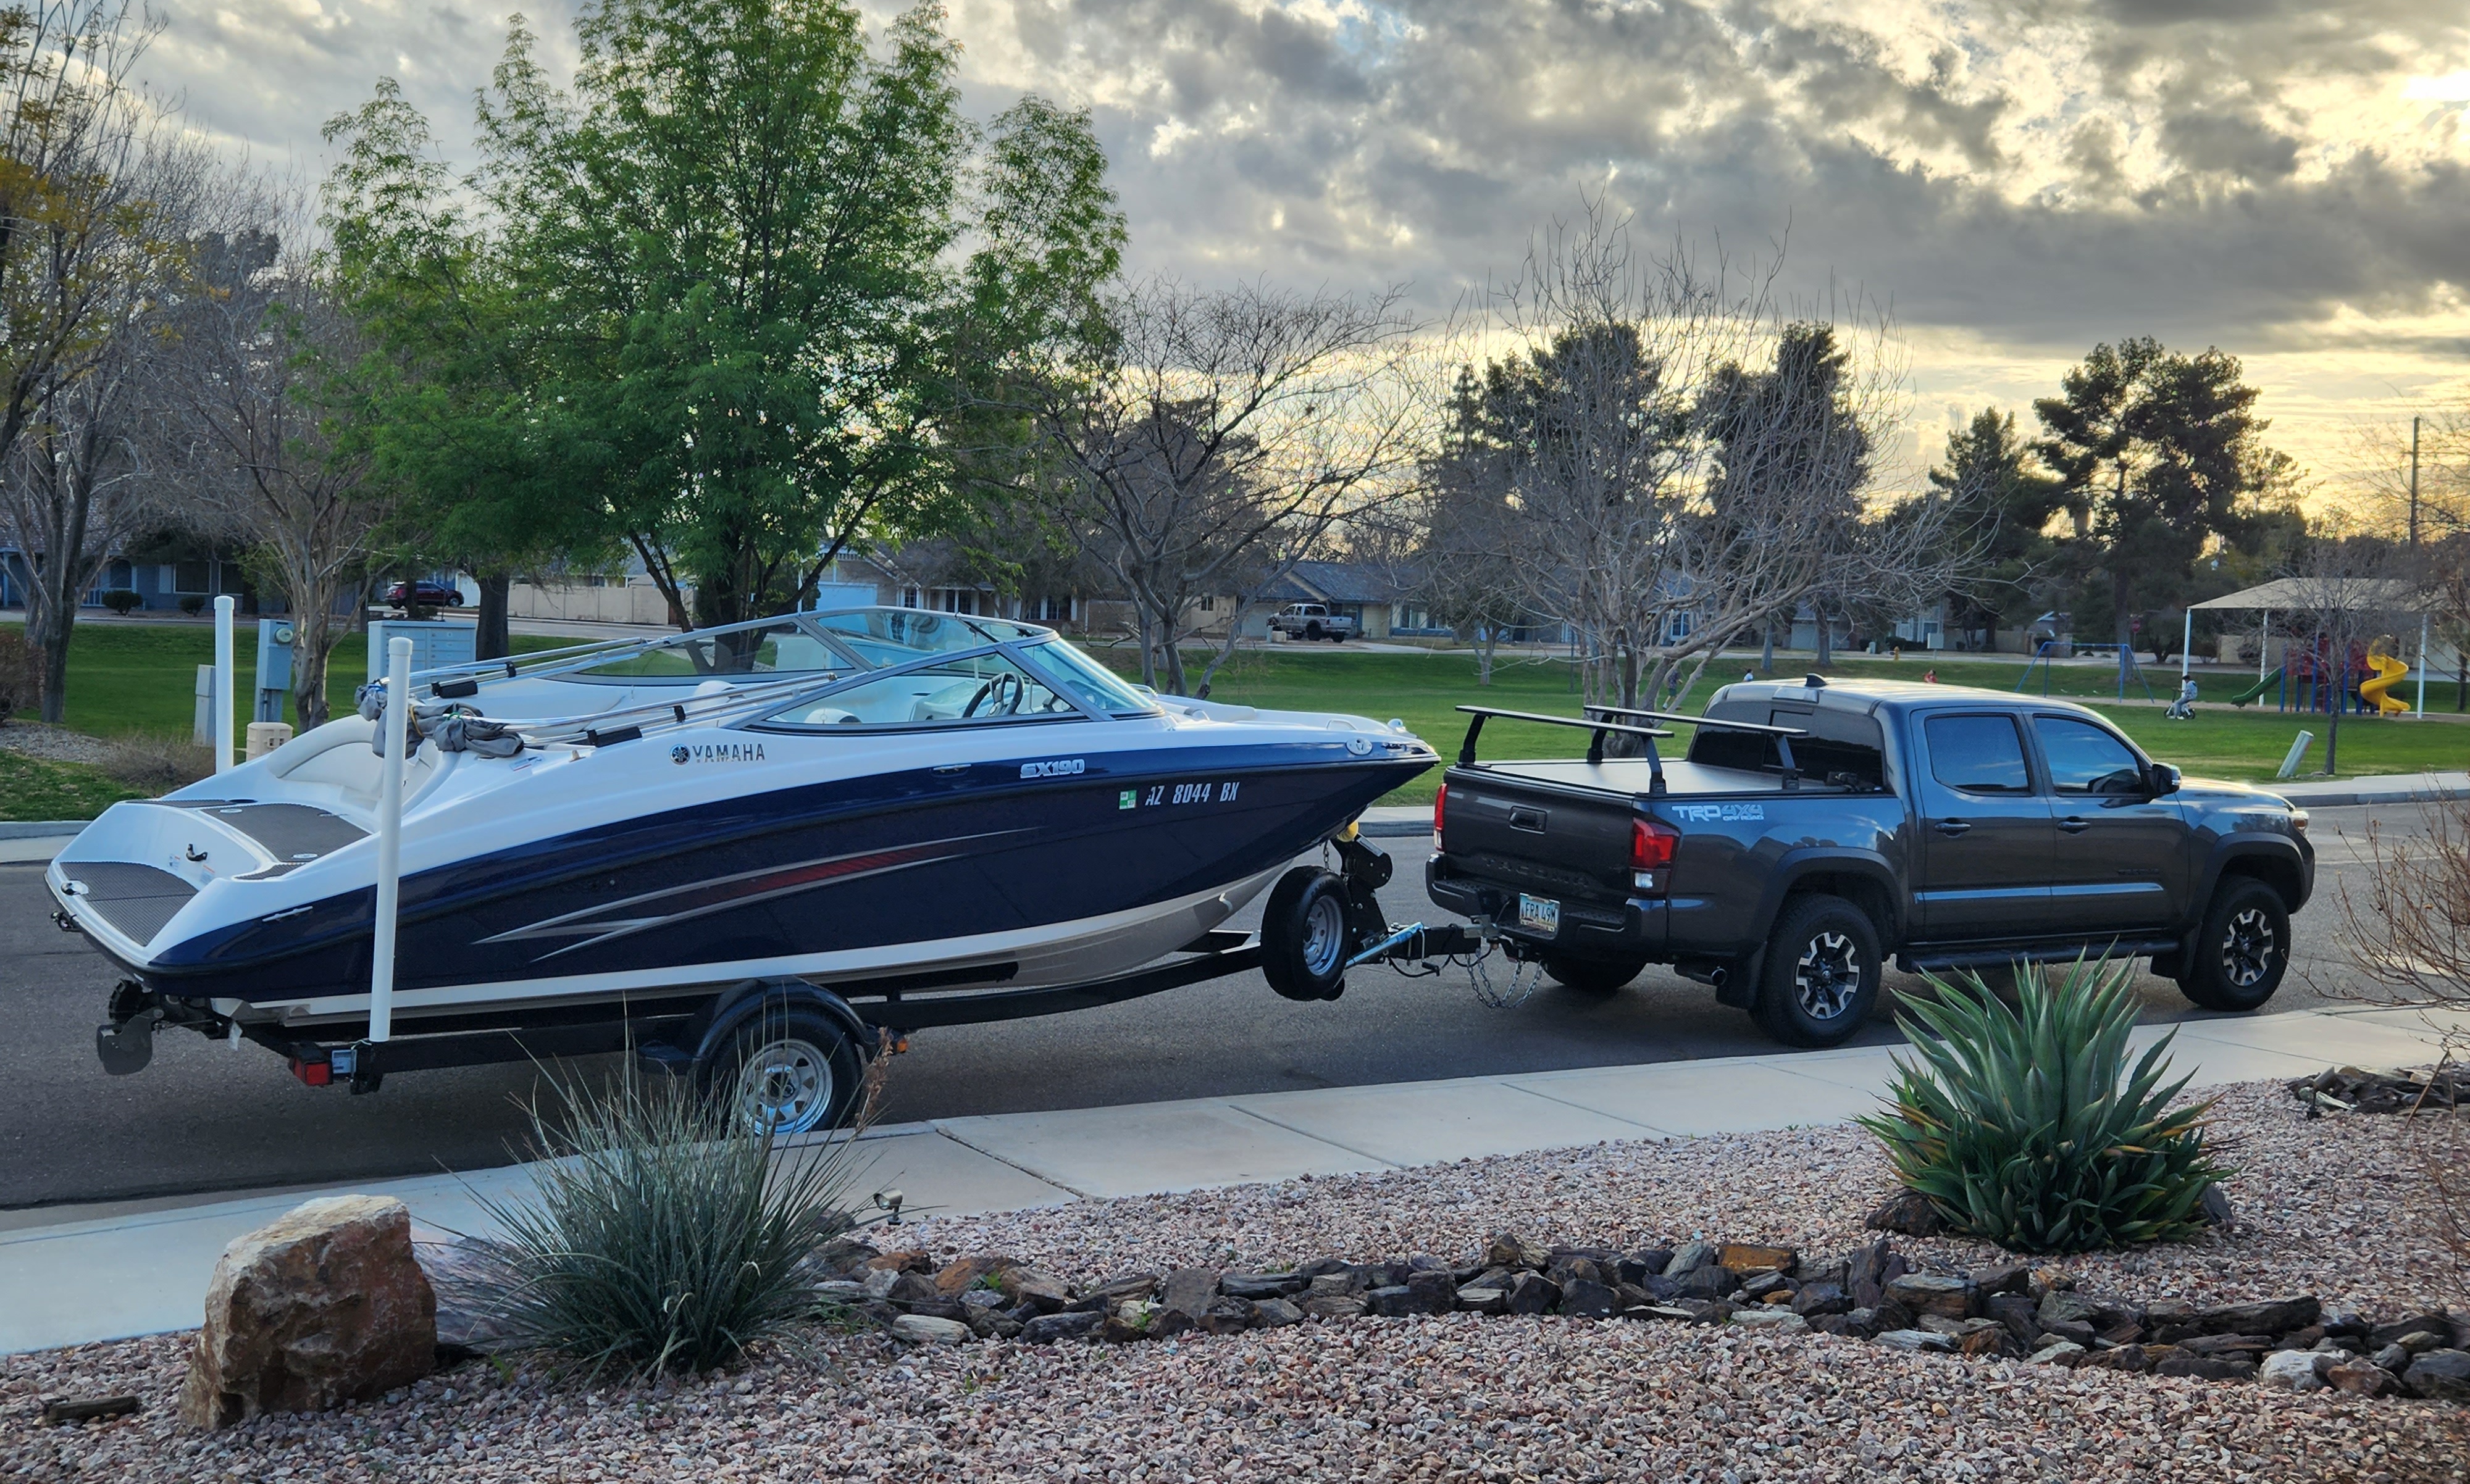 Yamaha SX190 Jet Boat for Rent at Canyon Lake, Arizona